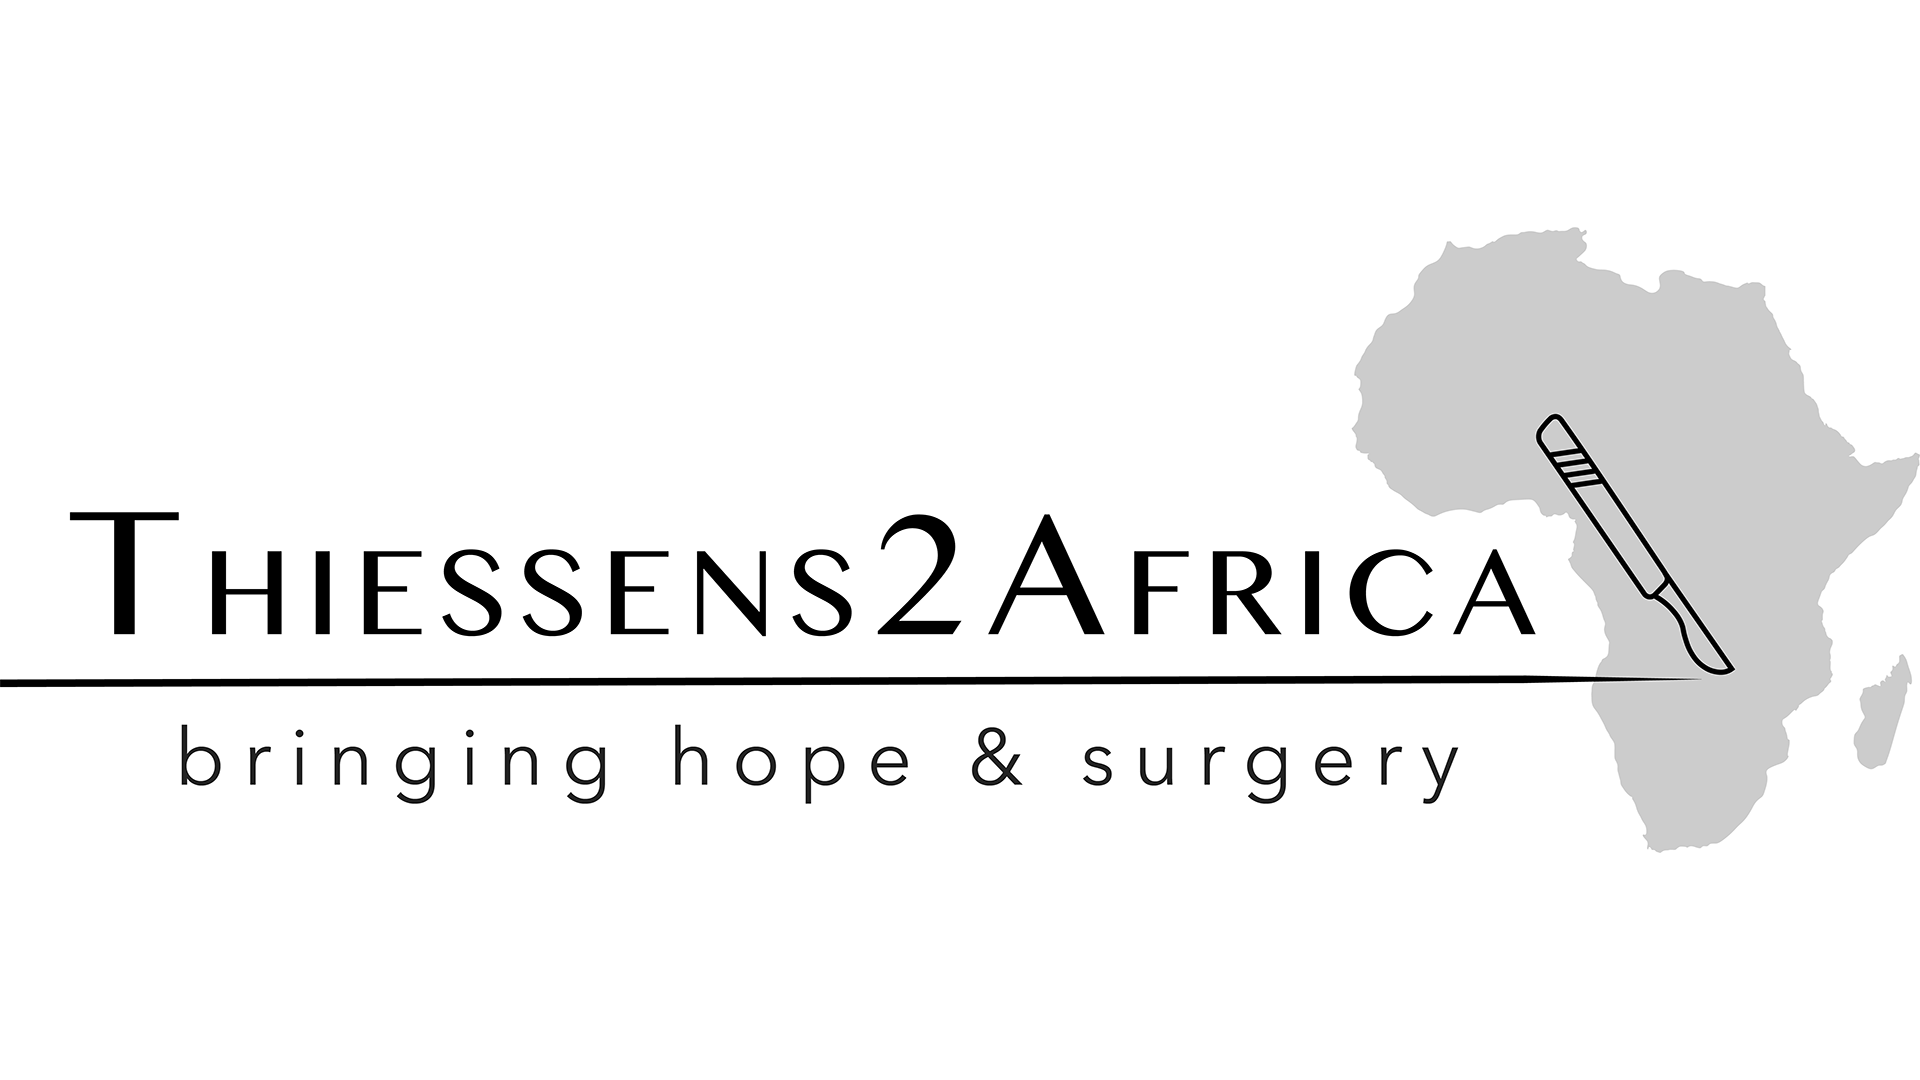 Thiessens2Africa logo